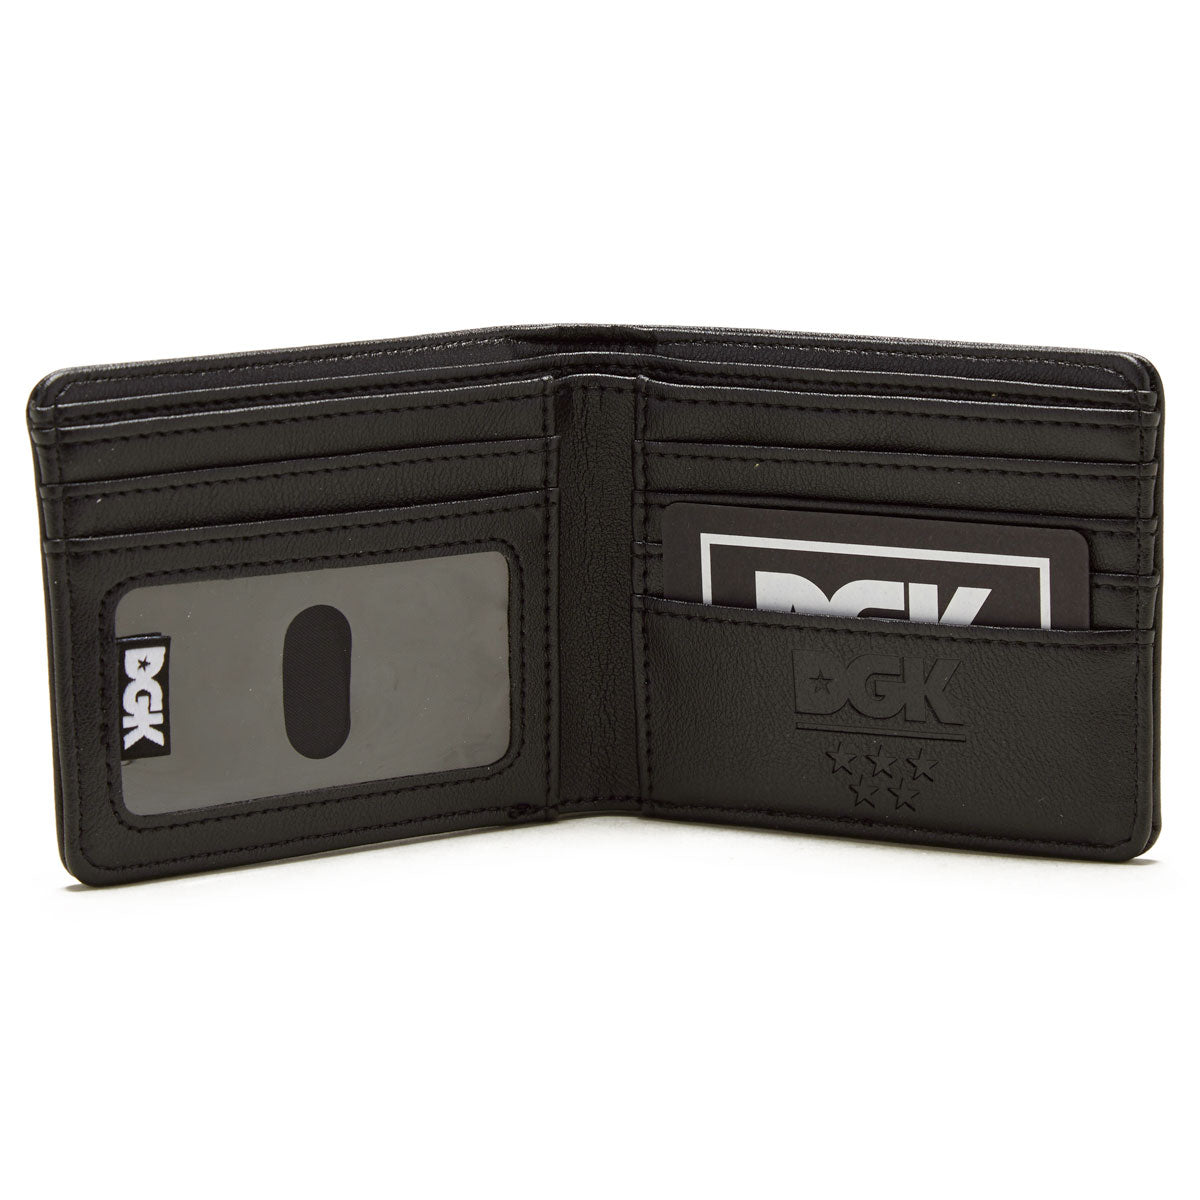 DGK Monogram Wallet - Black image 2